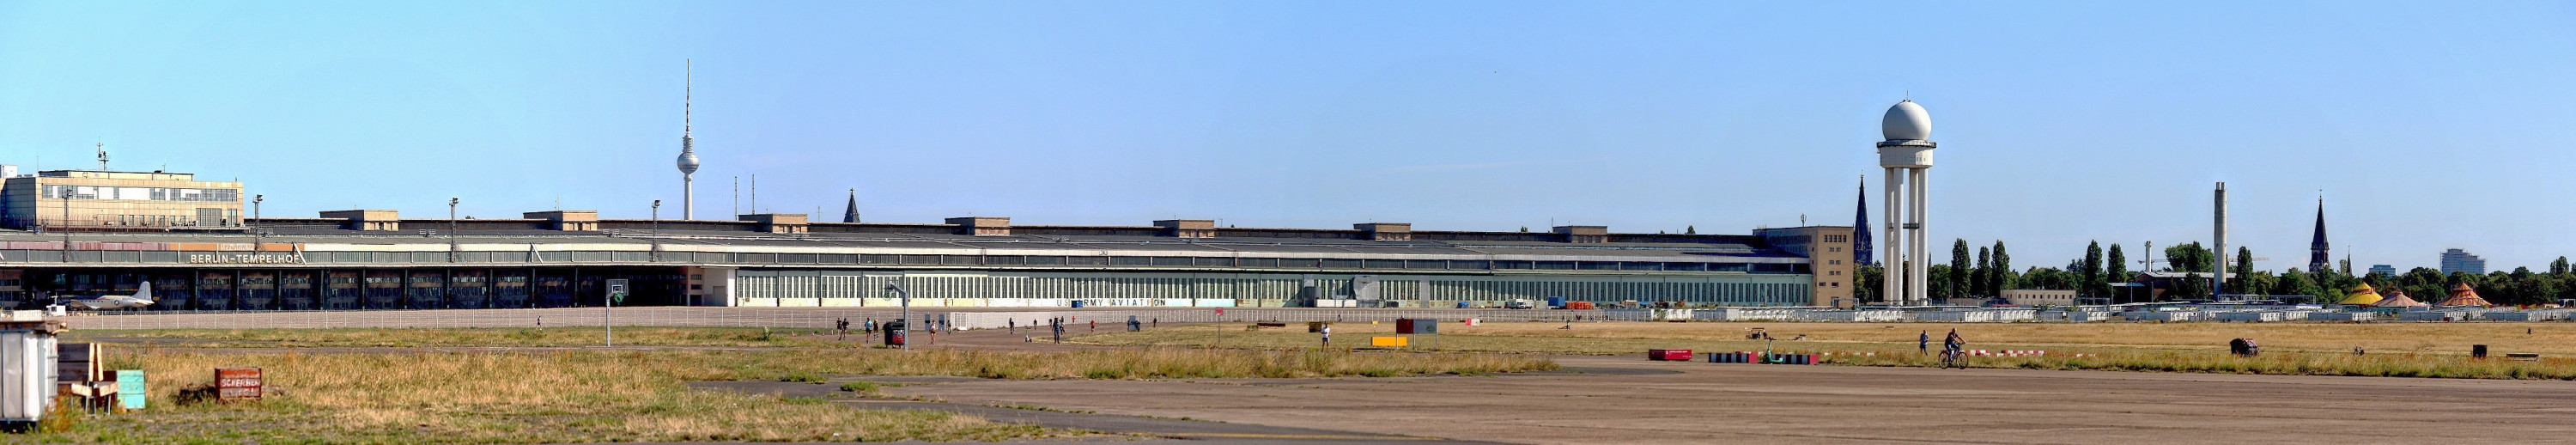 Ehemaliger Zentral - Flughafen Tempelhof